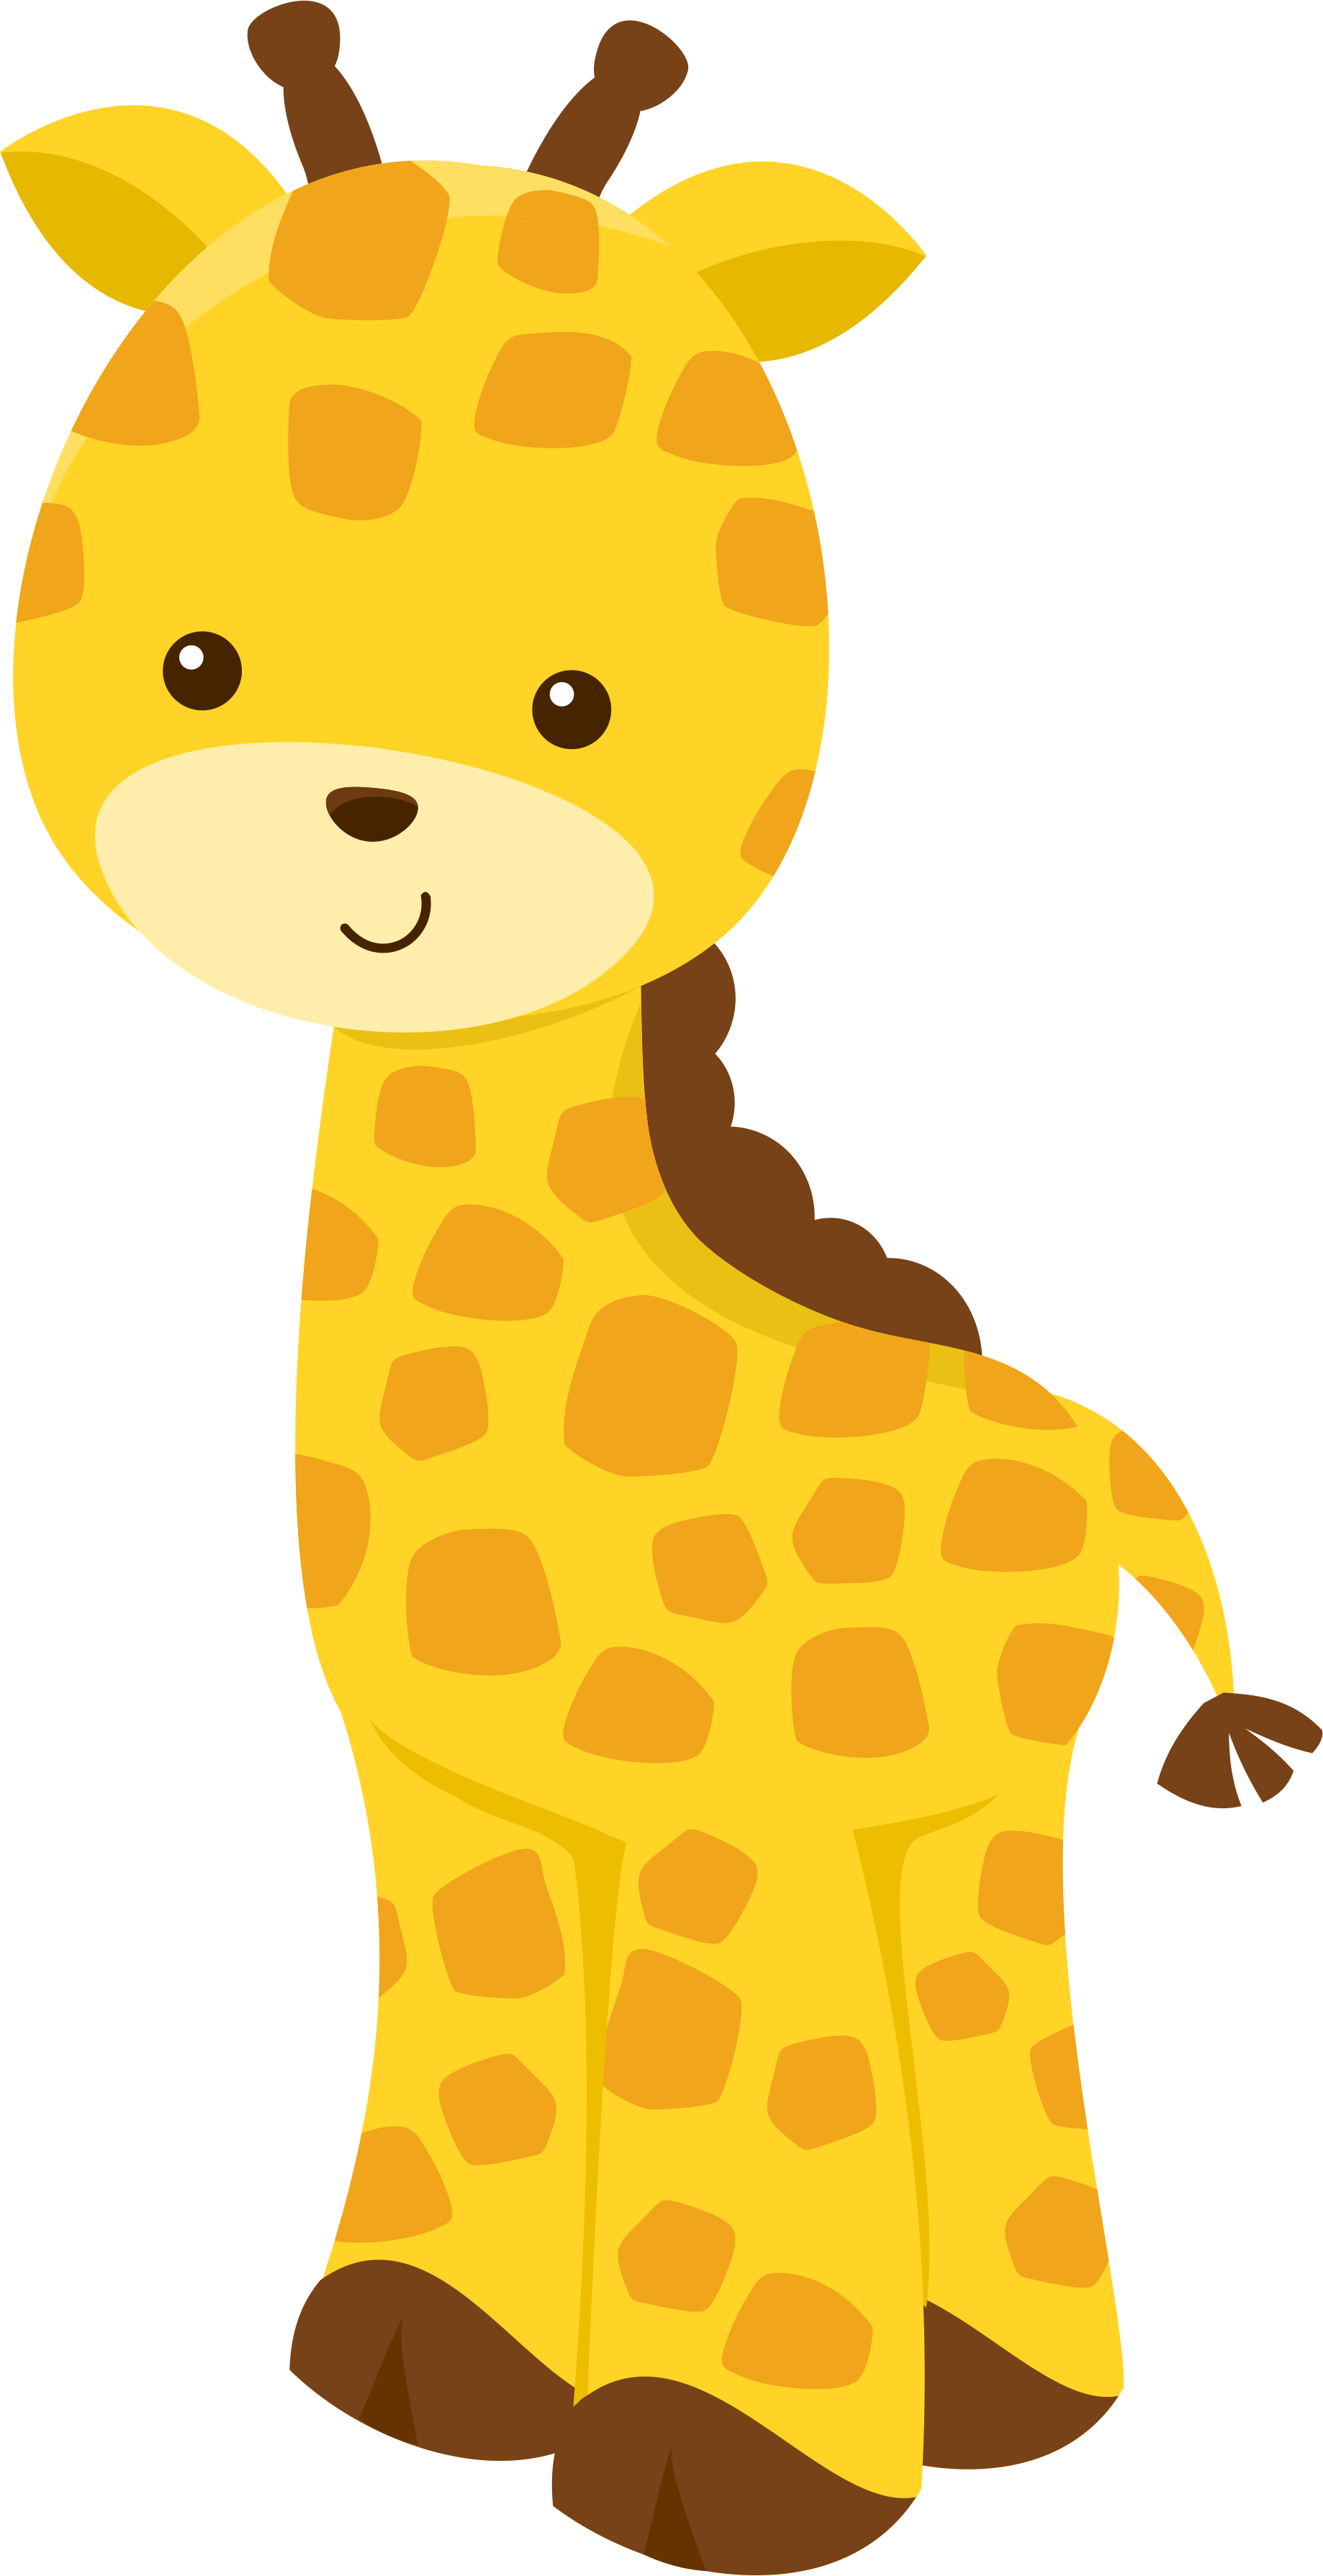 Girafa safari png clipart images gallery for free download.